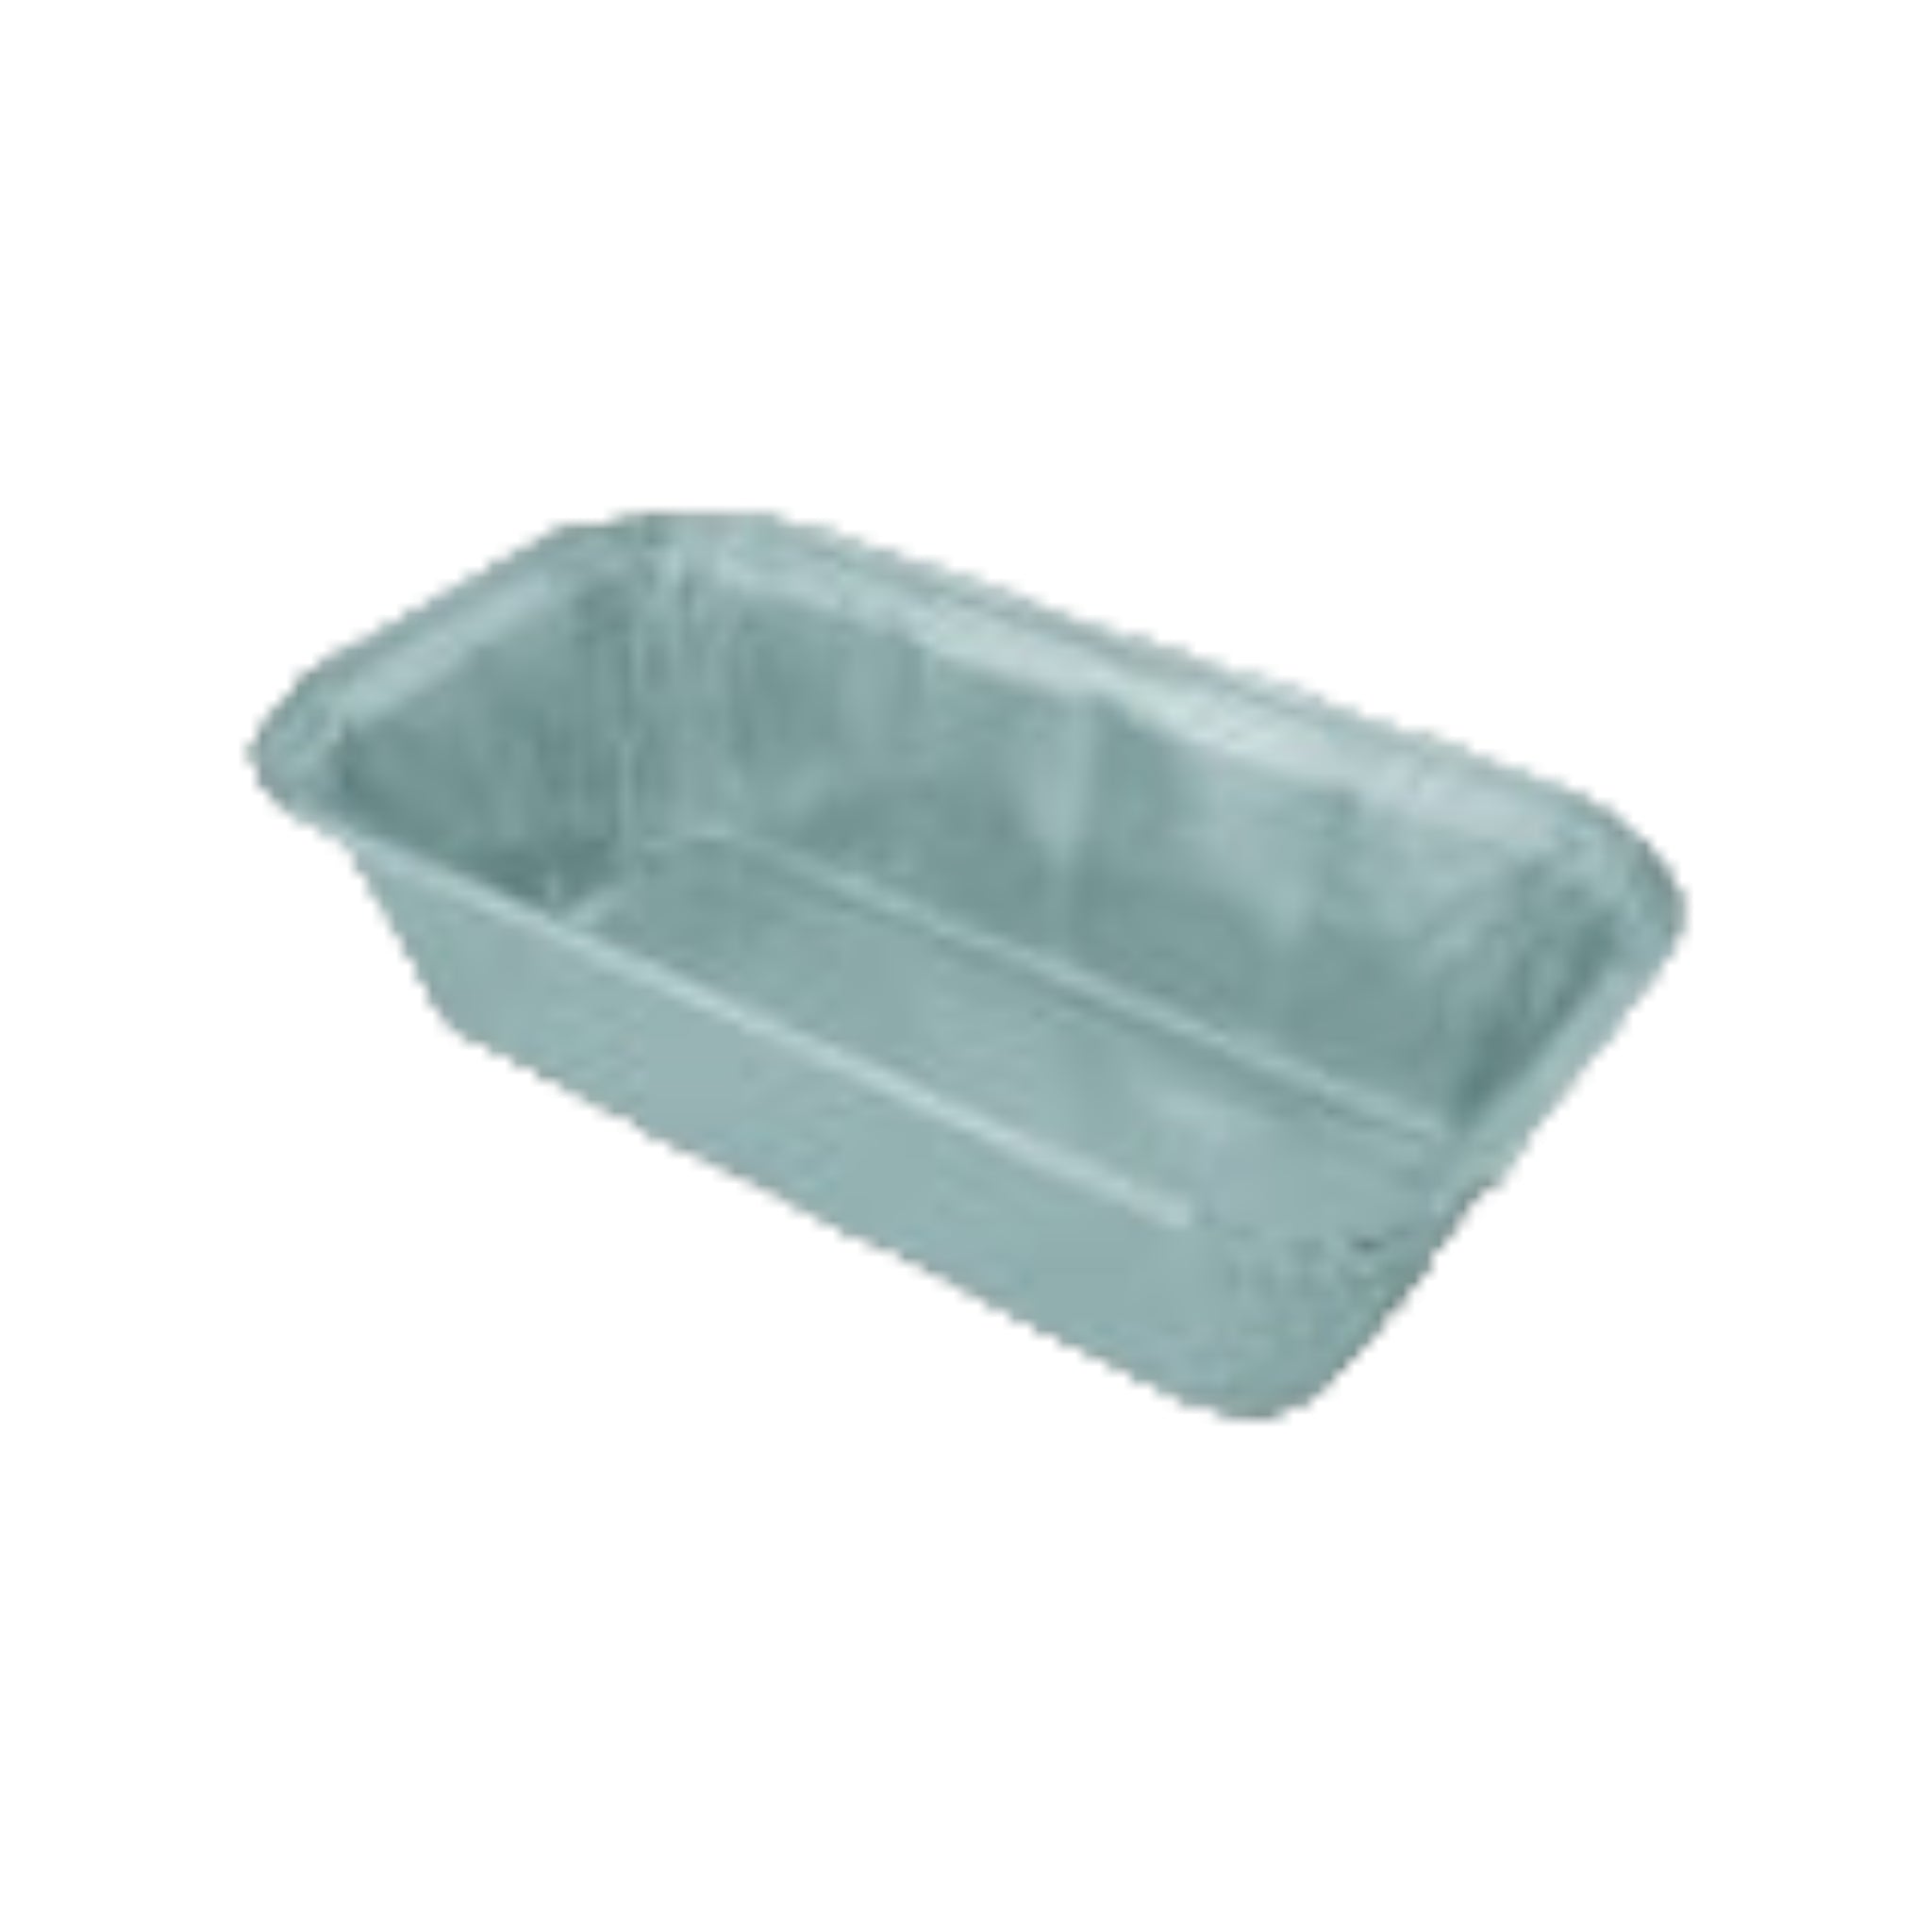 Aluminum Foil Loaf Container Tray Disposable 4433P Medium FG-4433P